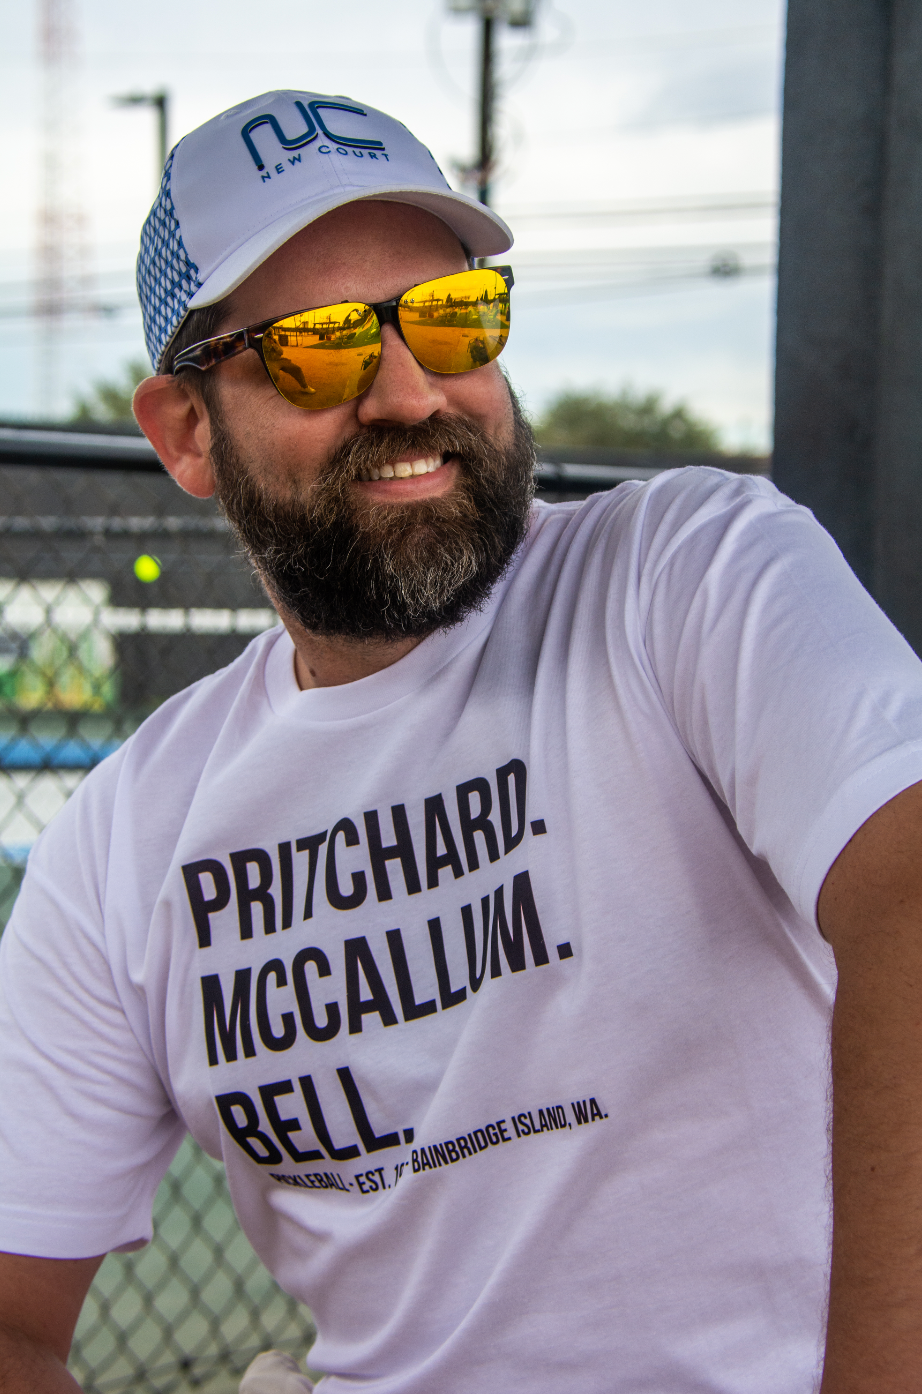 Man wearing pickeball founders tshirt that reads "Pritchard. McCallum. Bell. Pickleball - est. 1965 - Bainbridge island, WA."